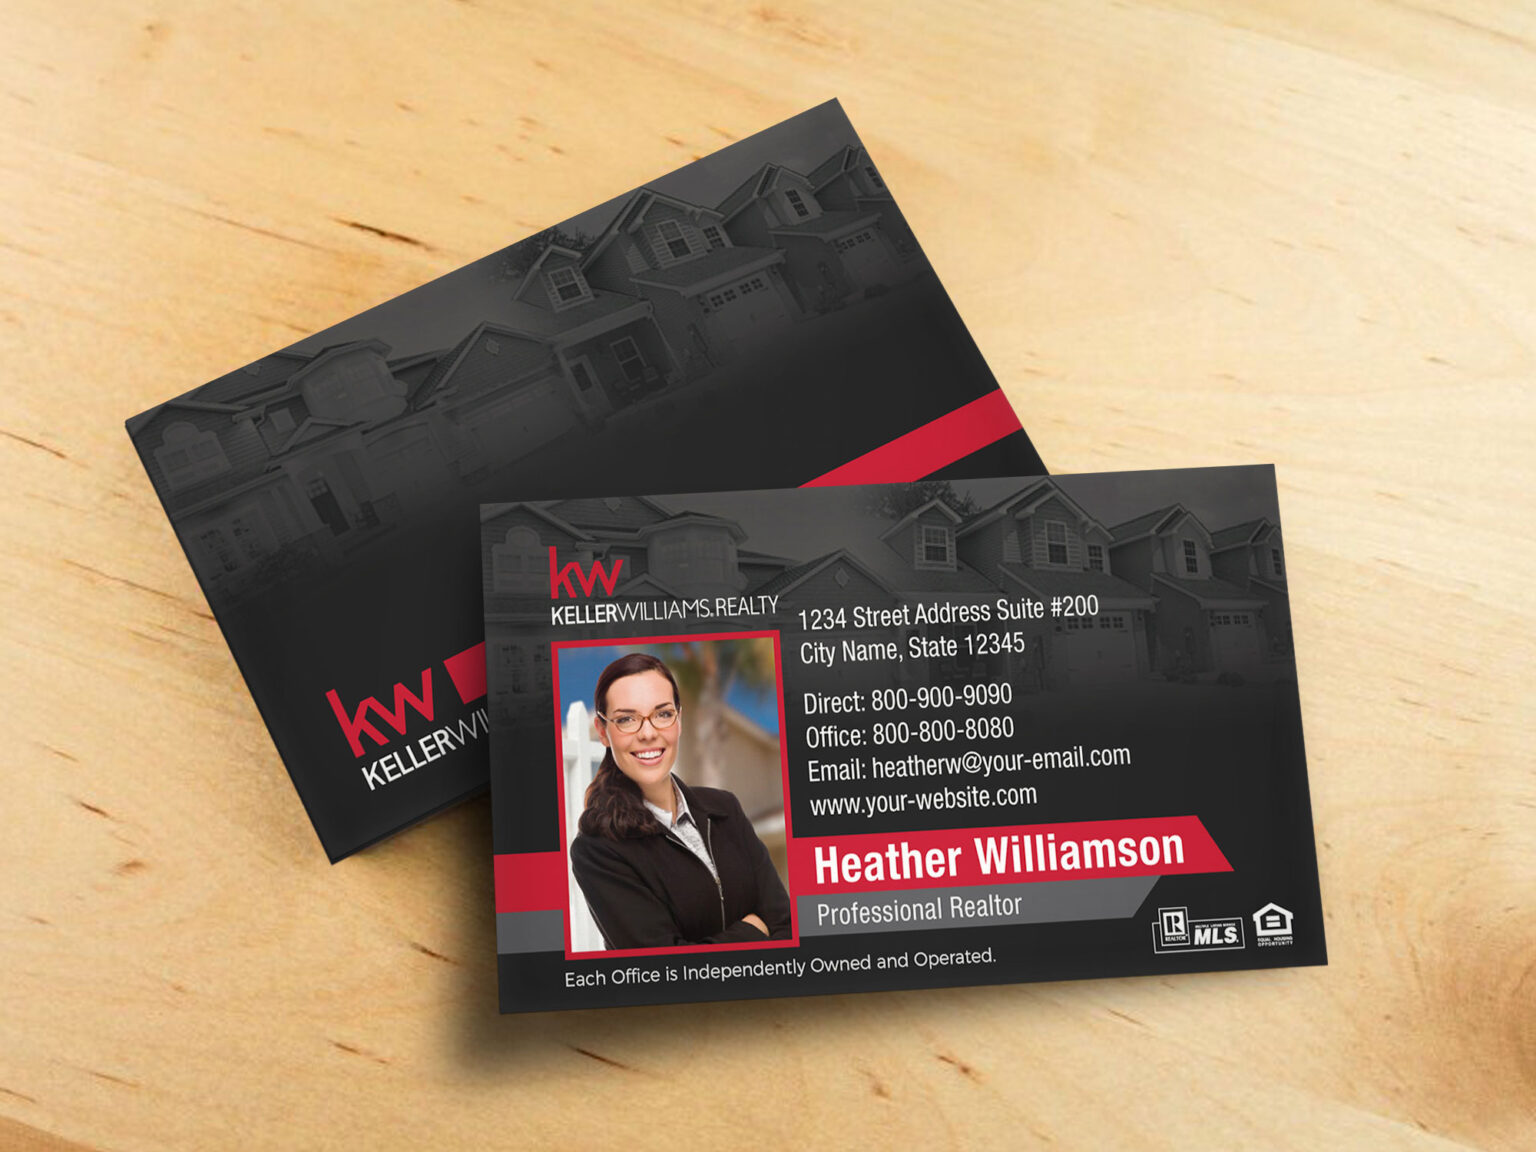 keller-williams-business-card-template-bc1861bl-kw-for-keller-williams-business-card-templates